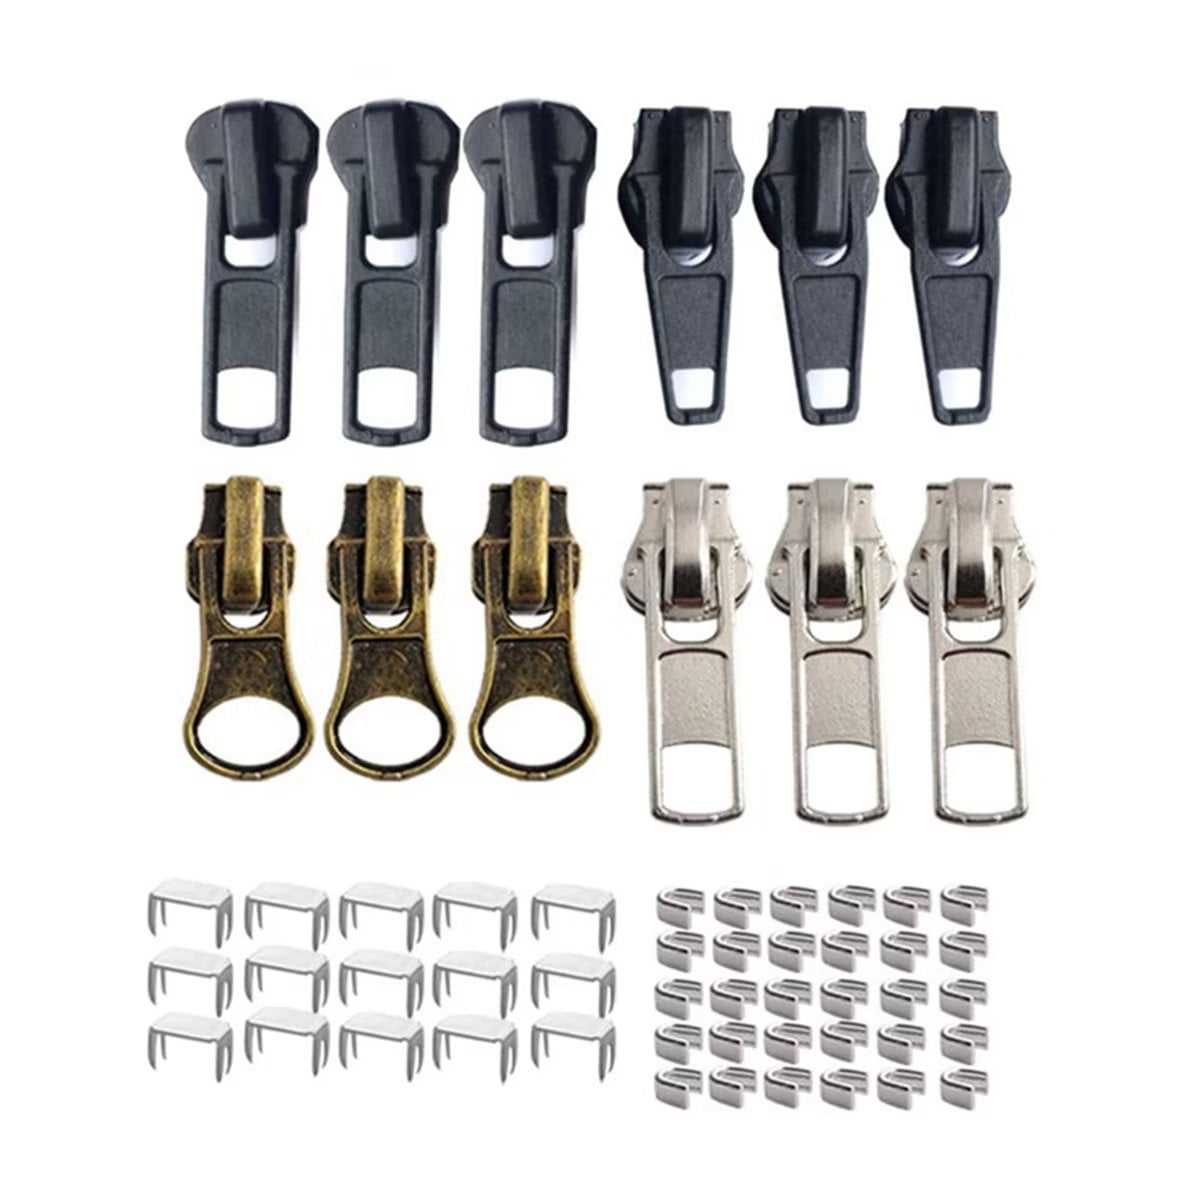  Zipper Repair Kit #5 Sliders with Pull 12 Pcs, Zipper